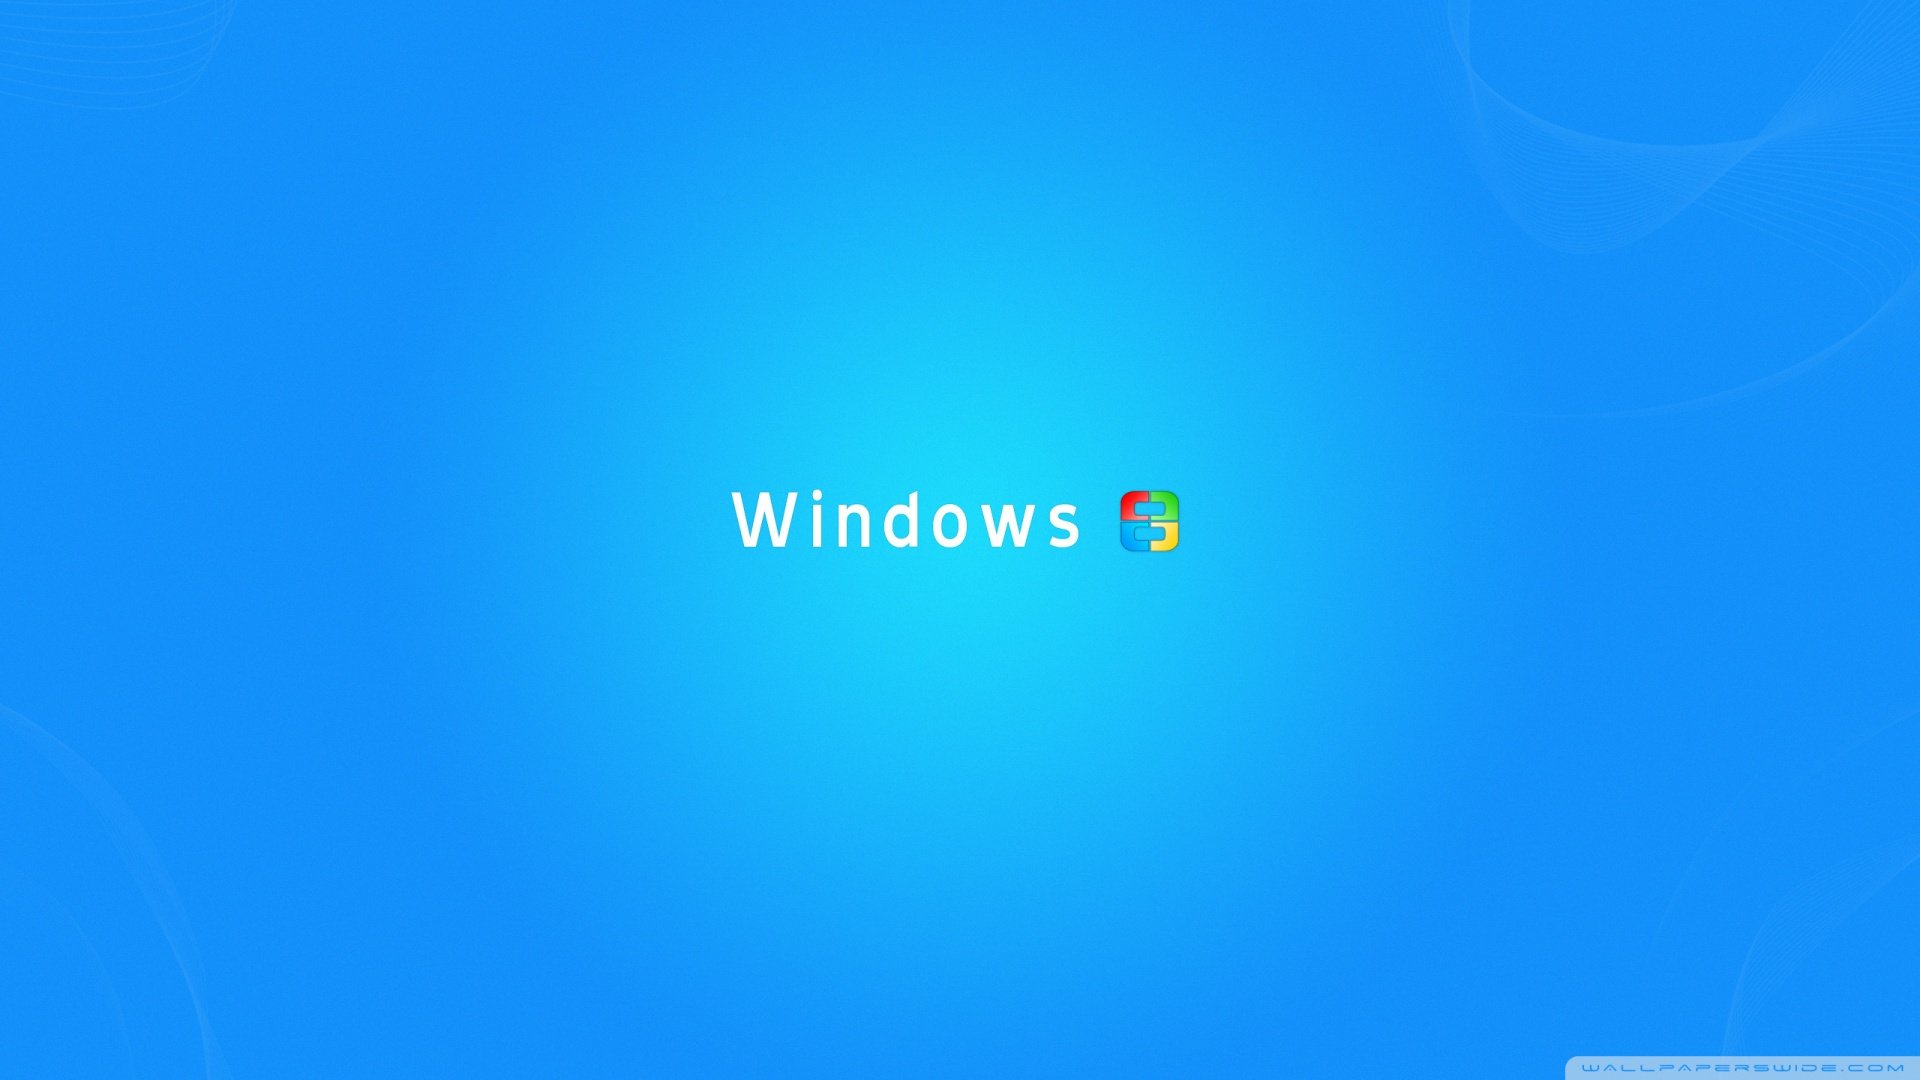 Windows 8 Wallpaper 1920x1080 1920x1080 windows 8 wallpaper